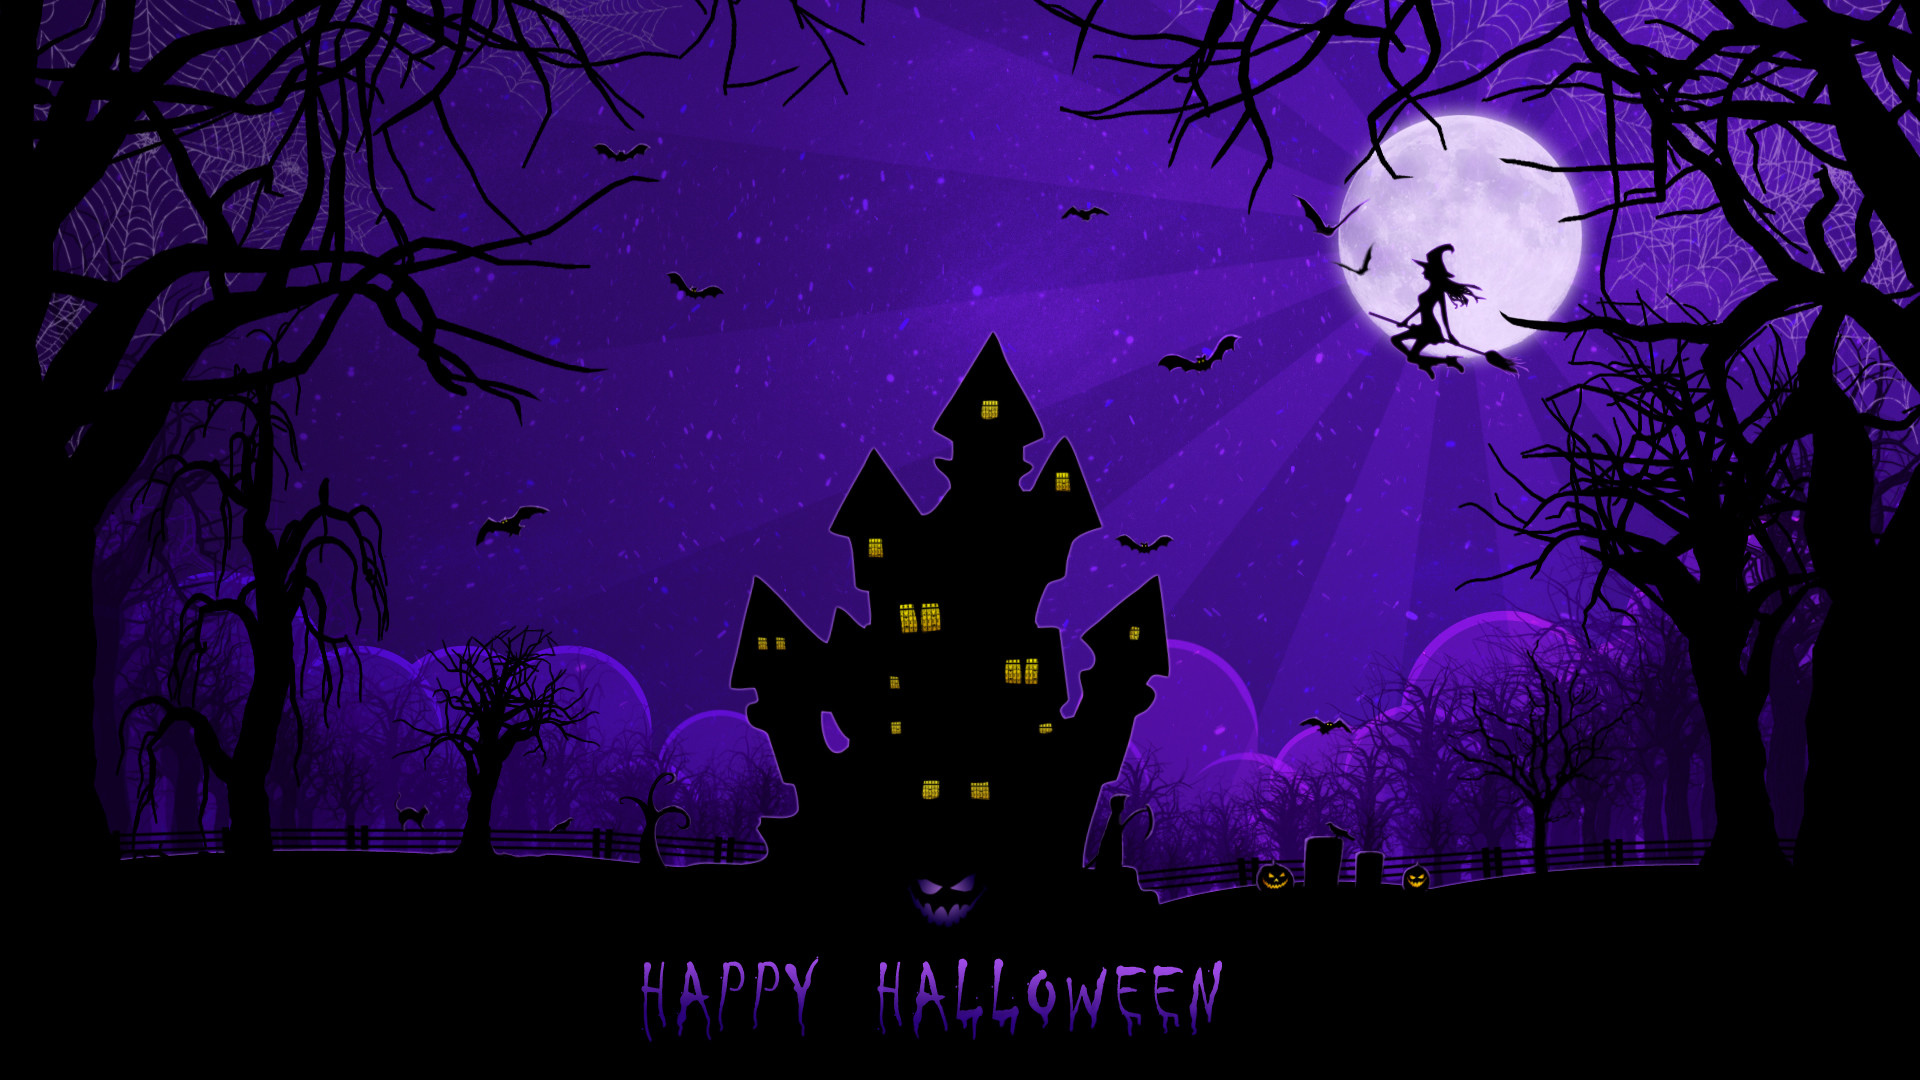 1920x1080 Full Size of Halloween: Halloween Tumblr Backgrounds Disney Yk Spooky  Wallpaper Images Photo: ...